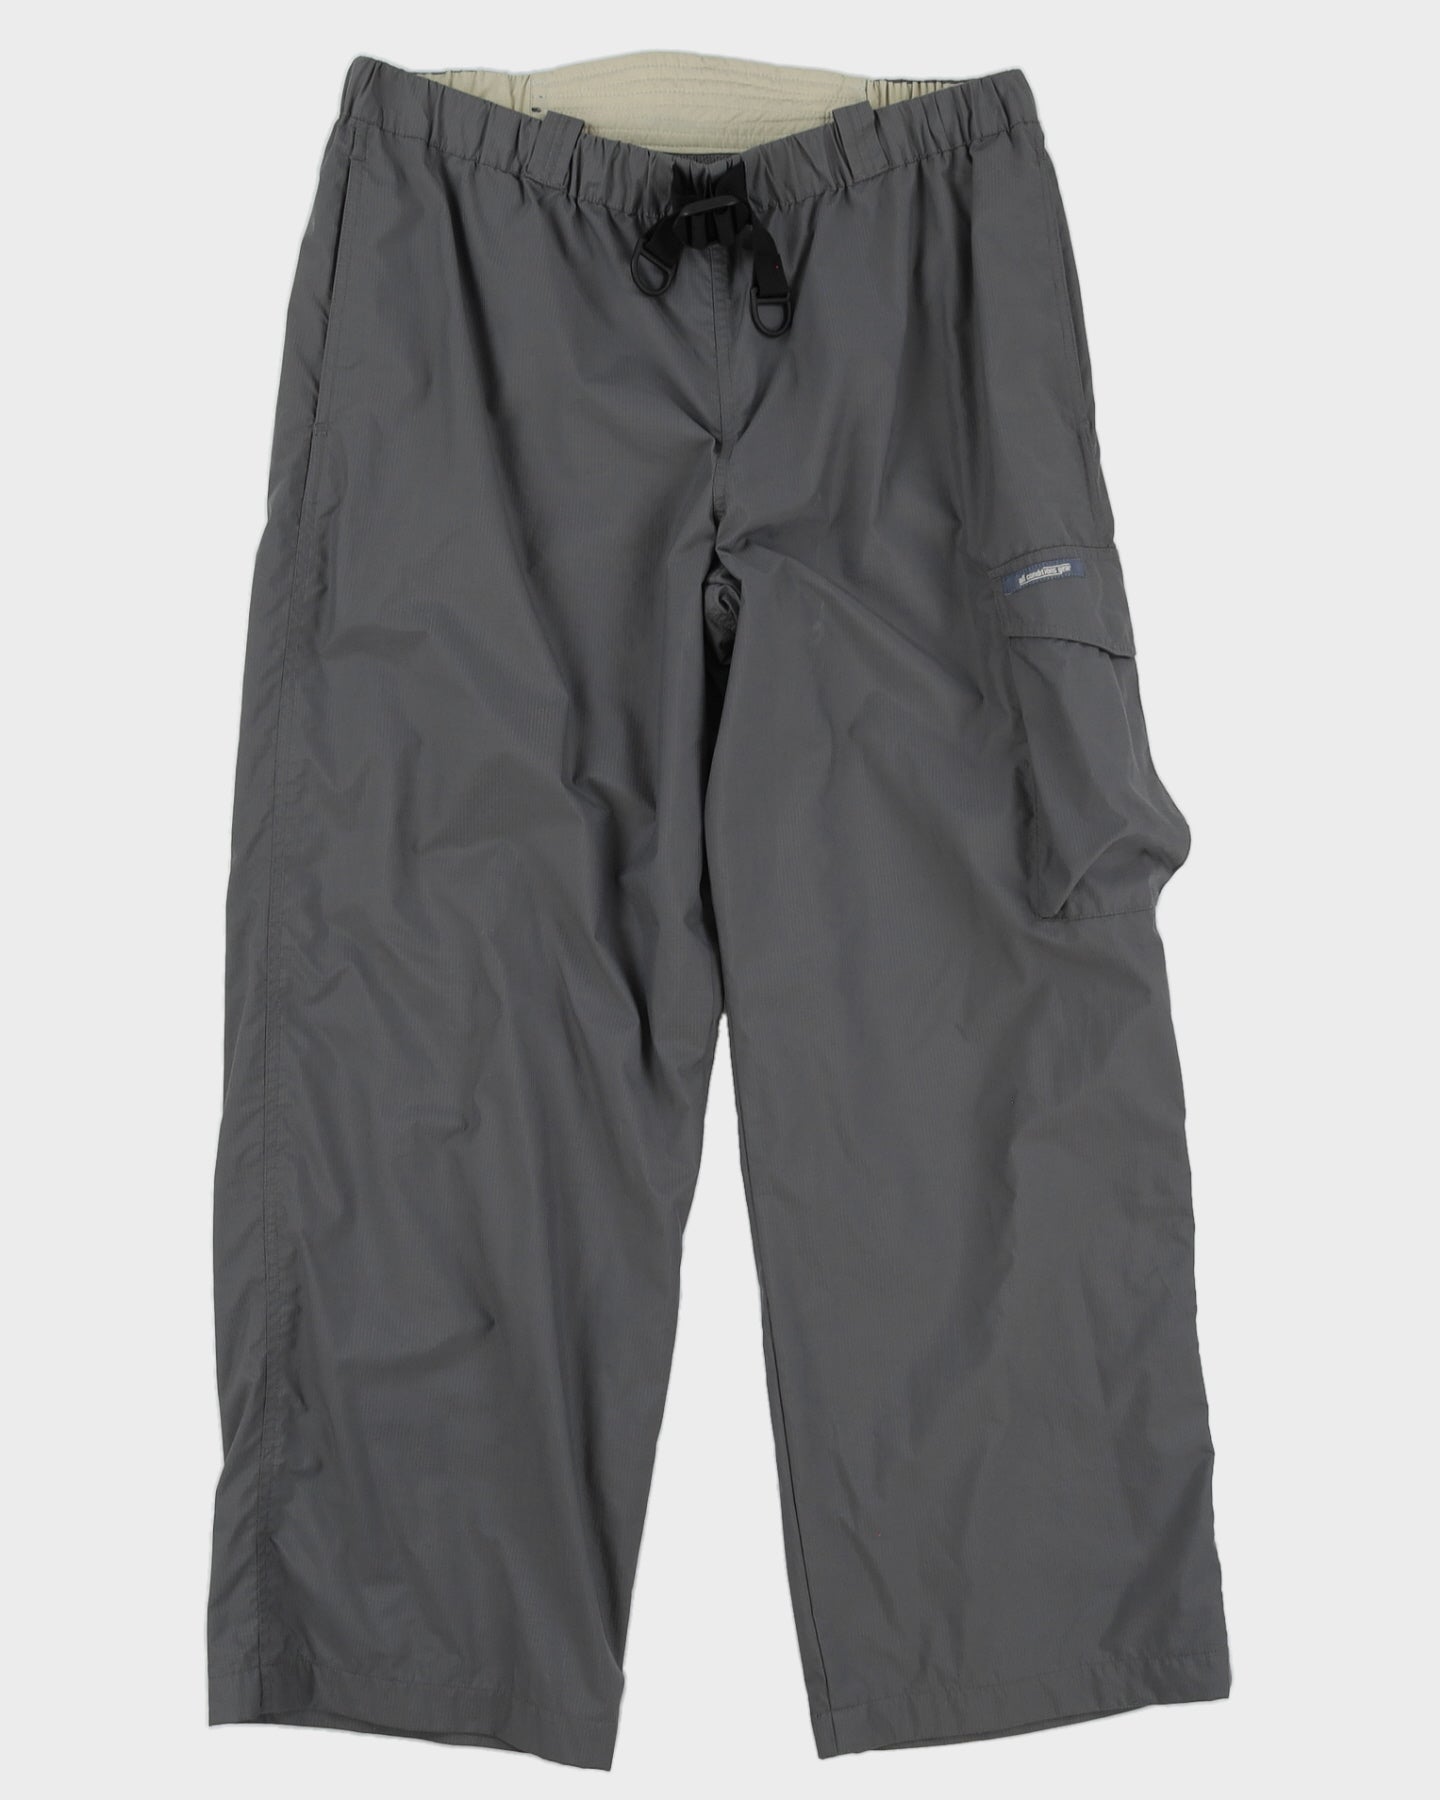 00s Nike ACG Technical Cargo Grey Trousers - W38 L32